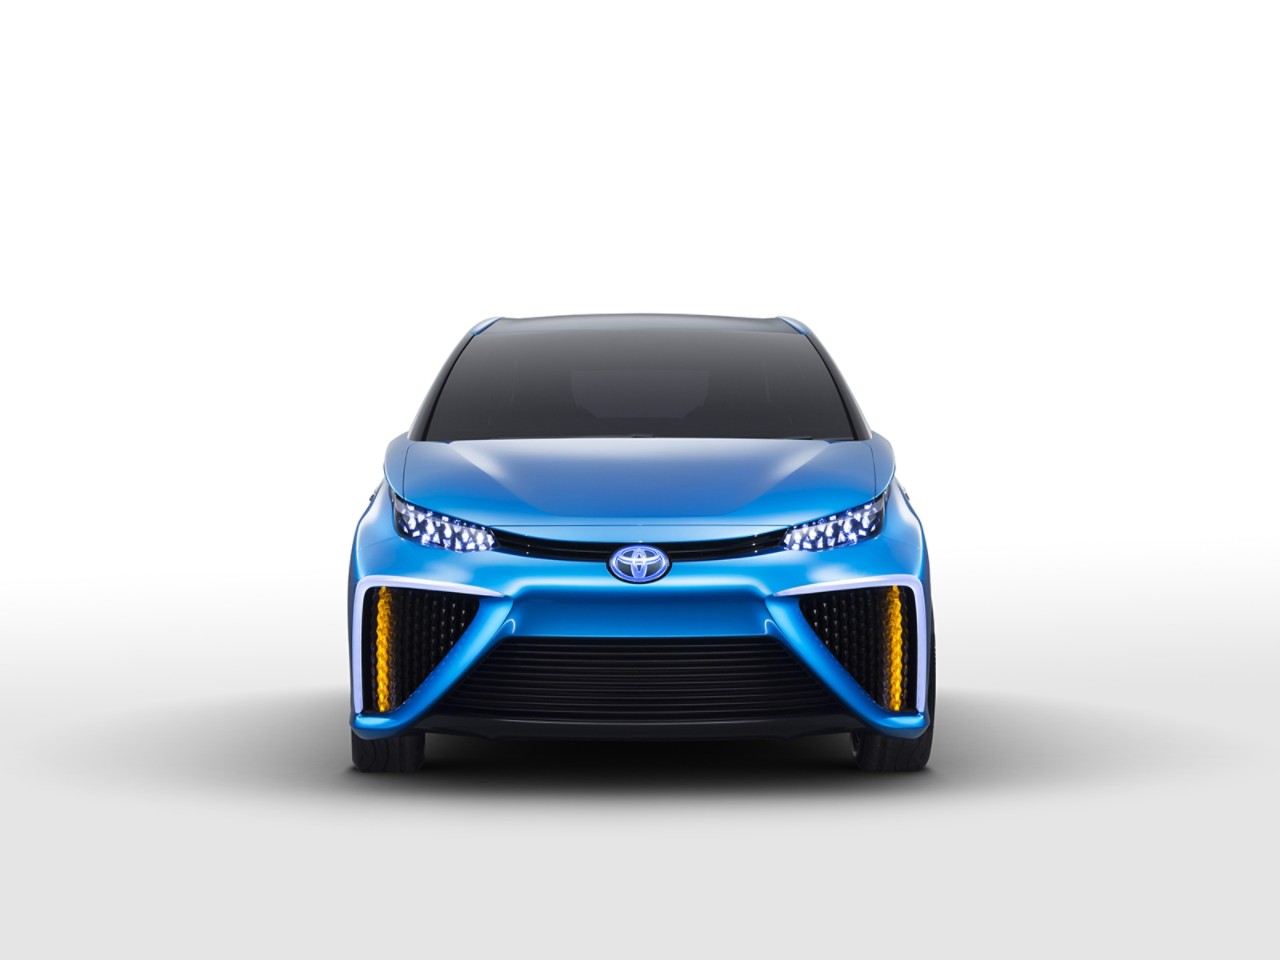 Toyota Concept Car